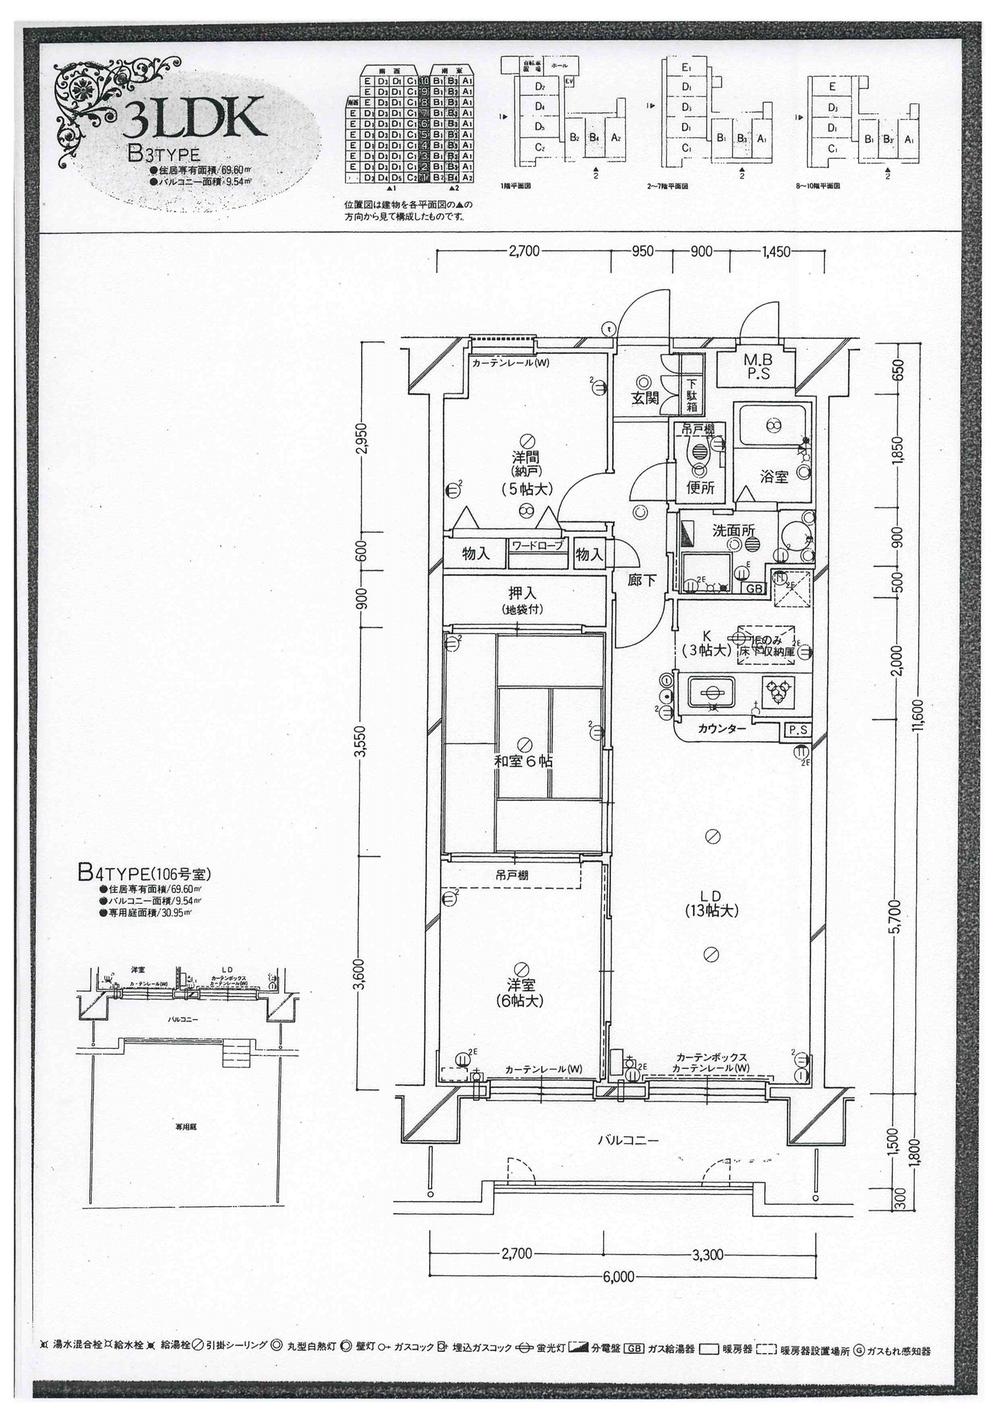 Floor plan. 3LDK, Price 11.8 million yen, Footprint 69.6 sq m , Balcony area 9.54 sq m